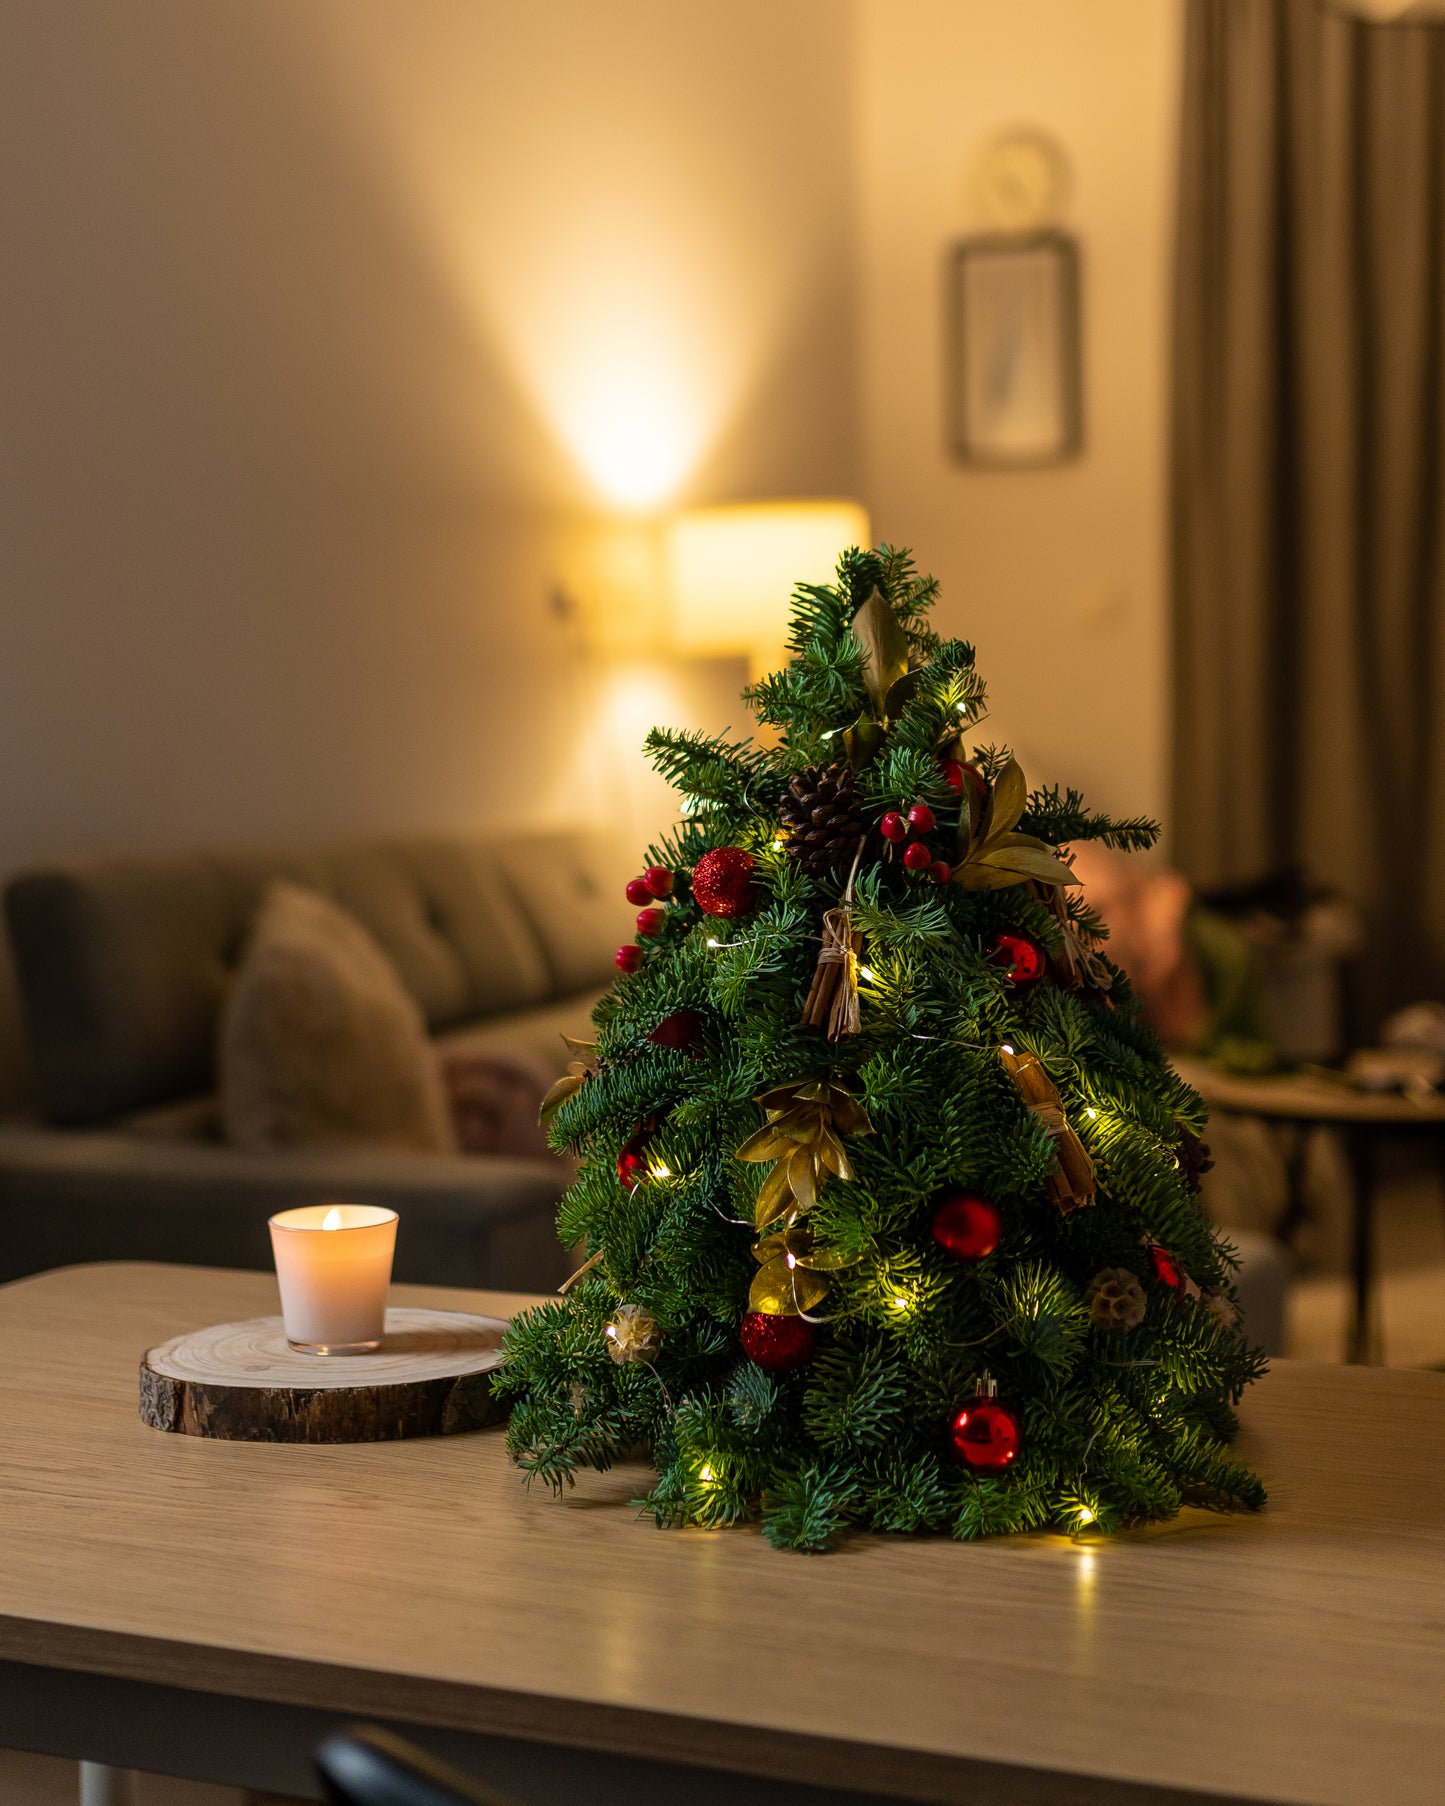 The Christmas Bliss Mini Tree